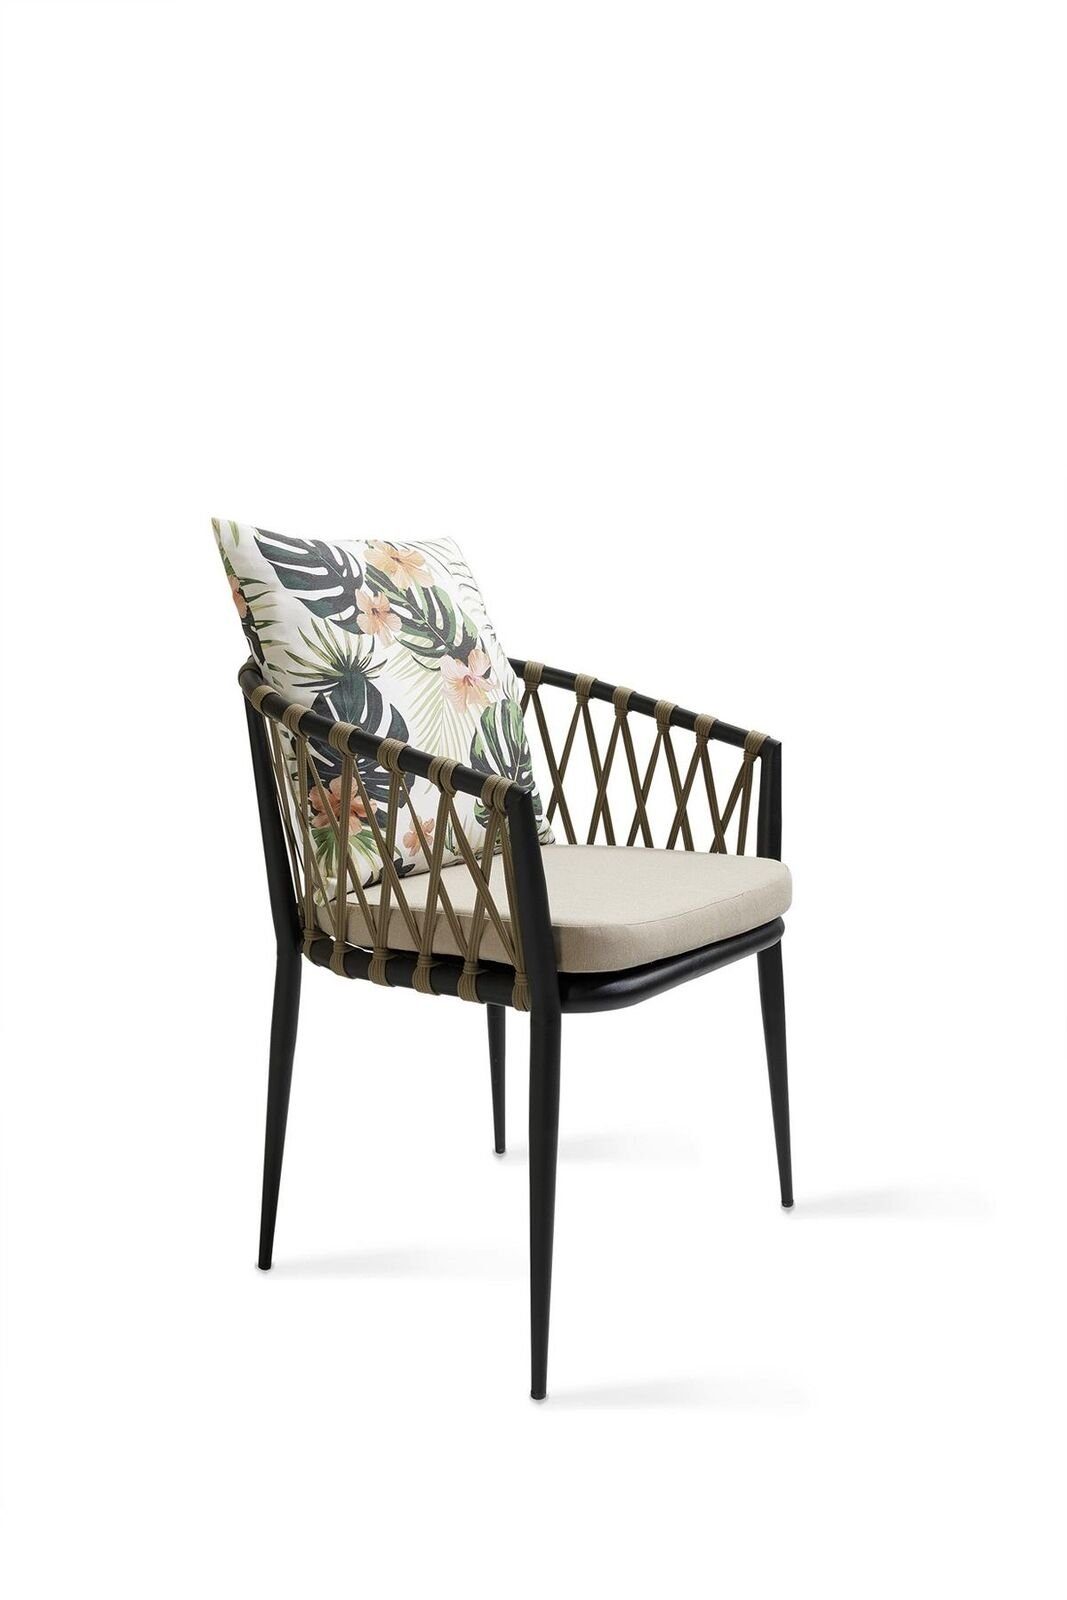 JVmoebel Armlehnstuhl Designer Armlehnstuhl Luxus Designer Stuhl mit Armlehnen Neu Möbel, Made in Europa